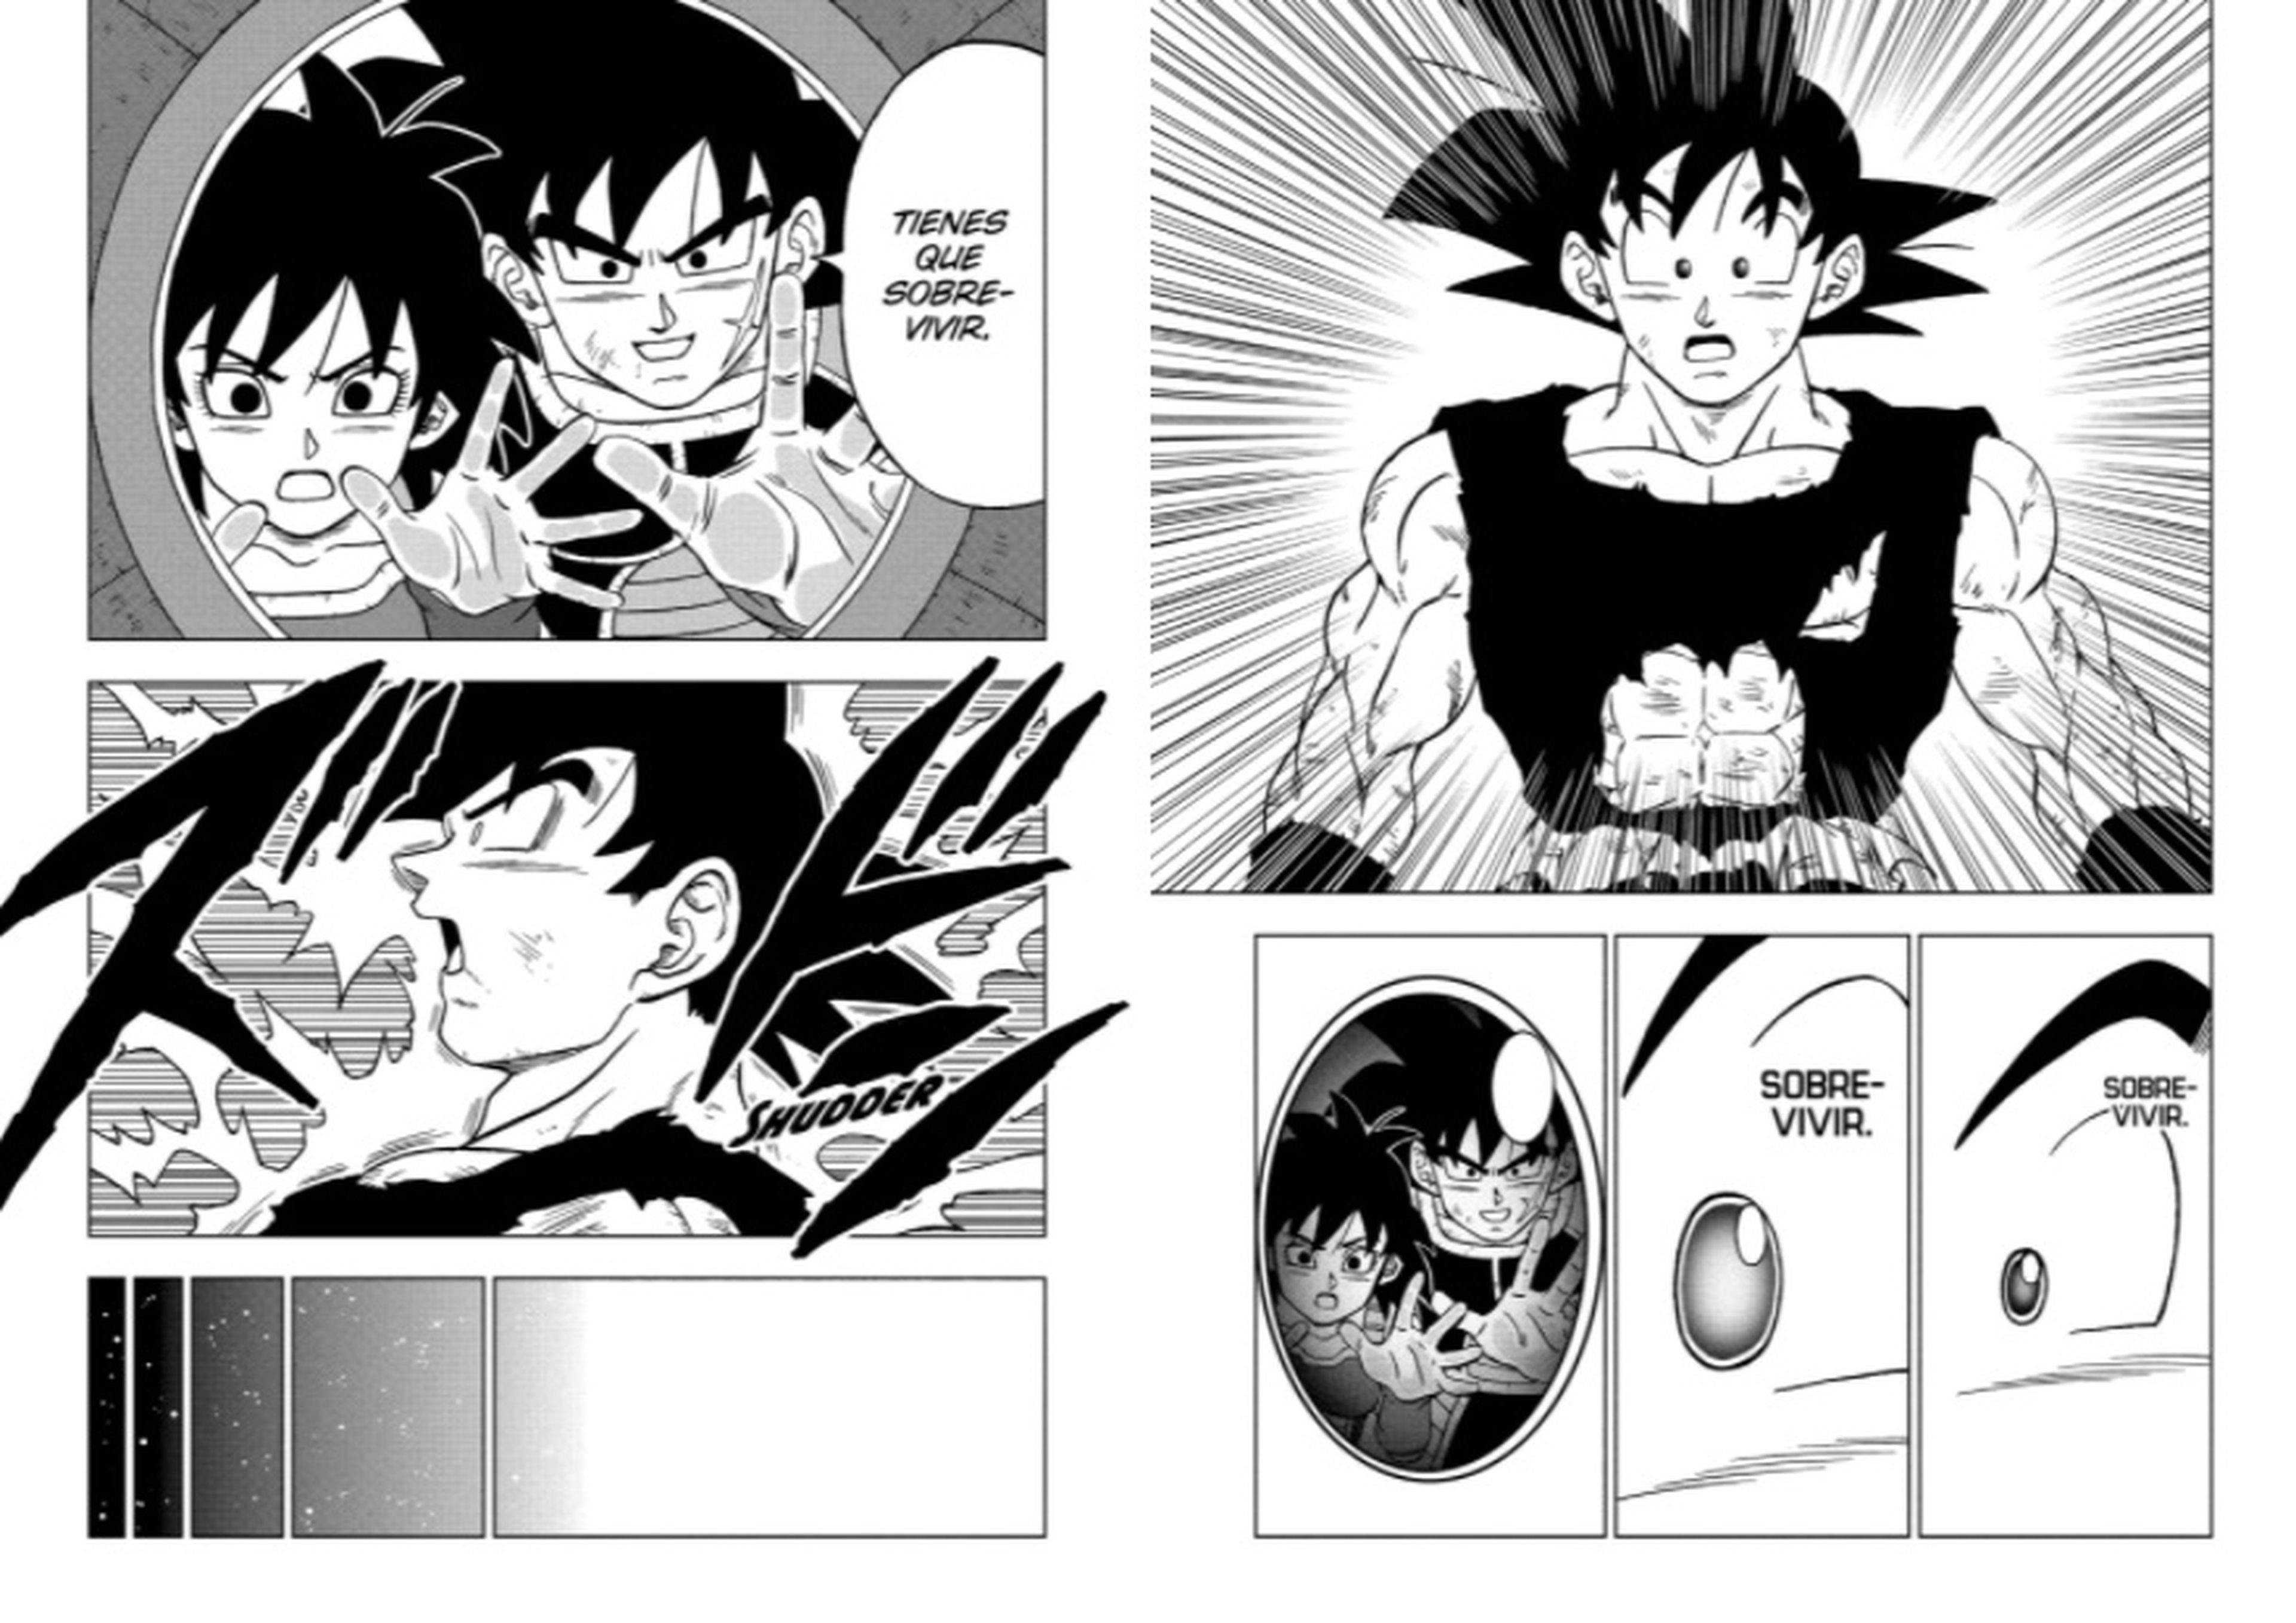 El último capítulo del manga Dragon Ball Super muestra una gran